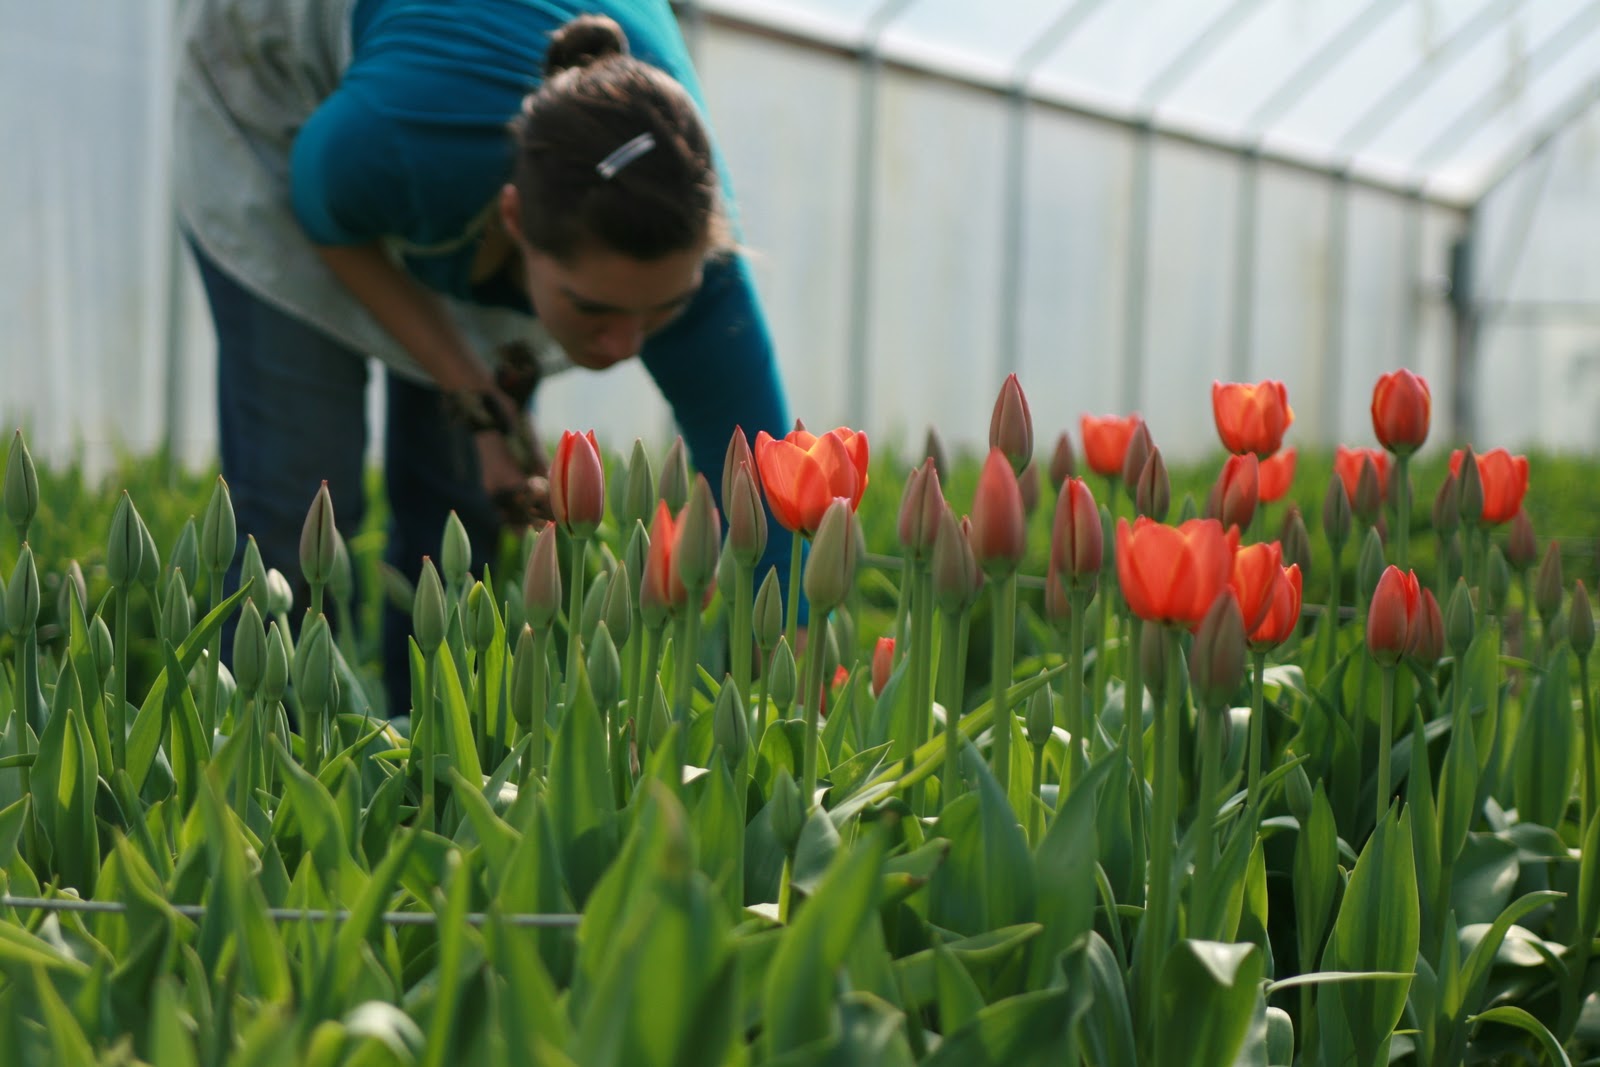 Erin Benzakein harvesting tulips